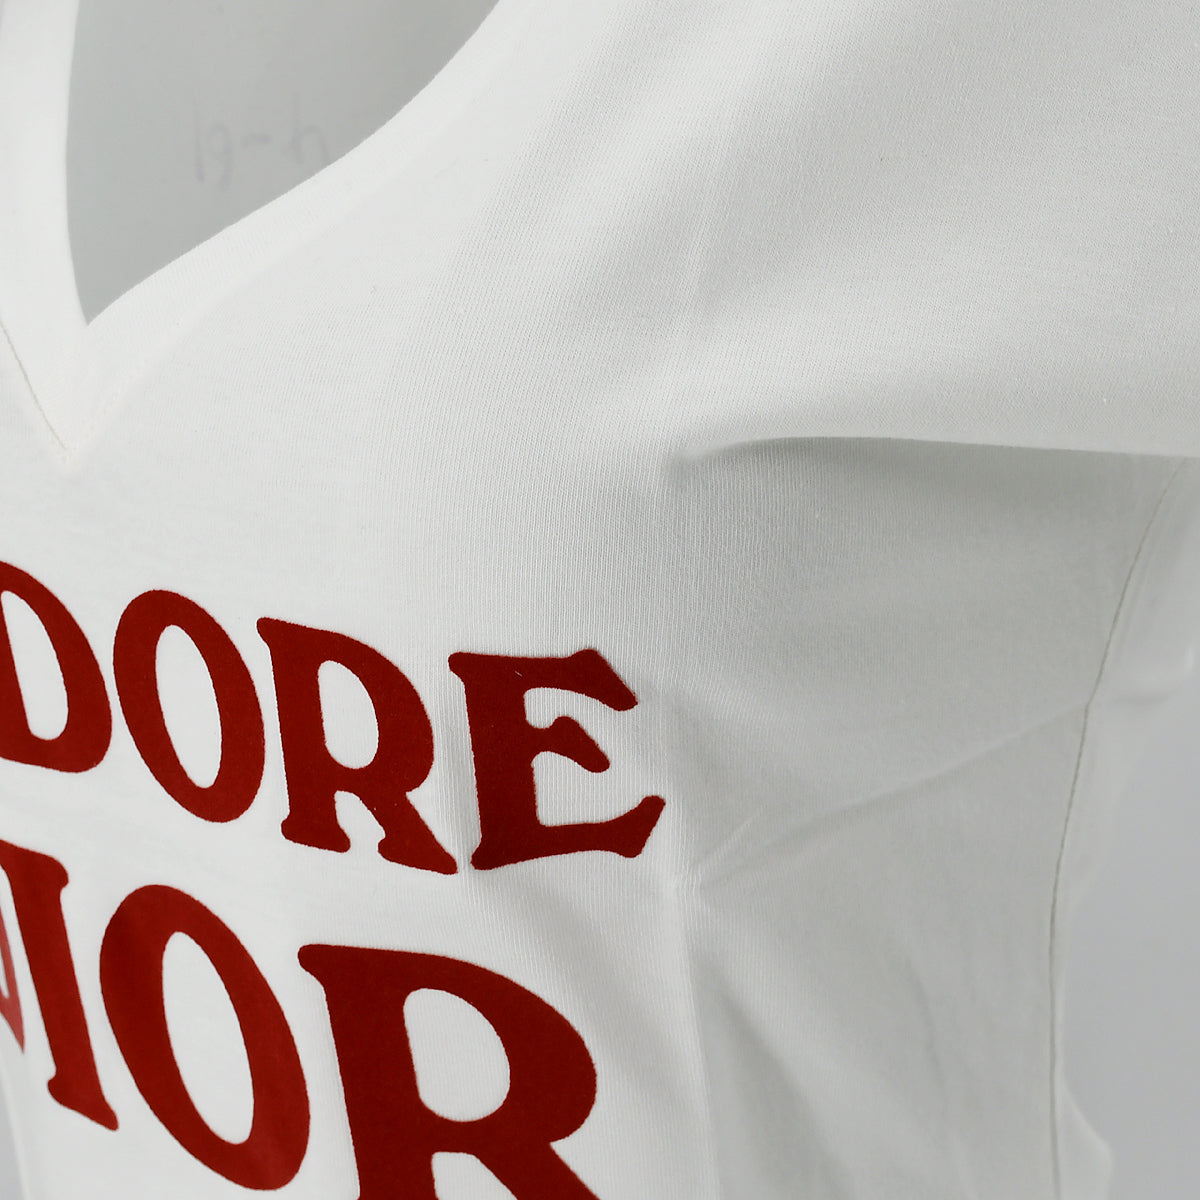 Christian Dior 2003 J'Adore Dior T-shirt 